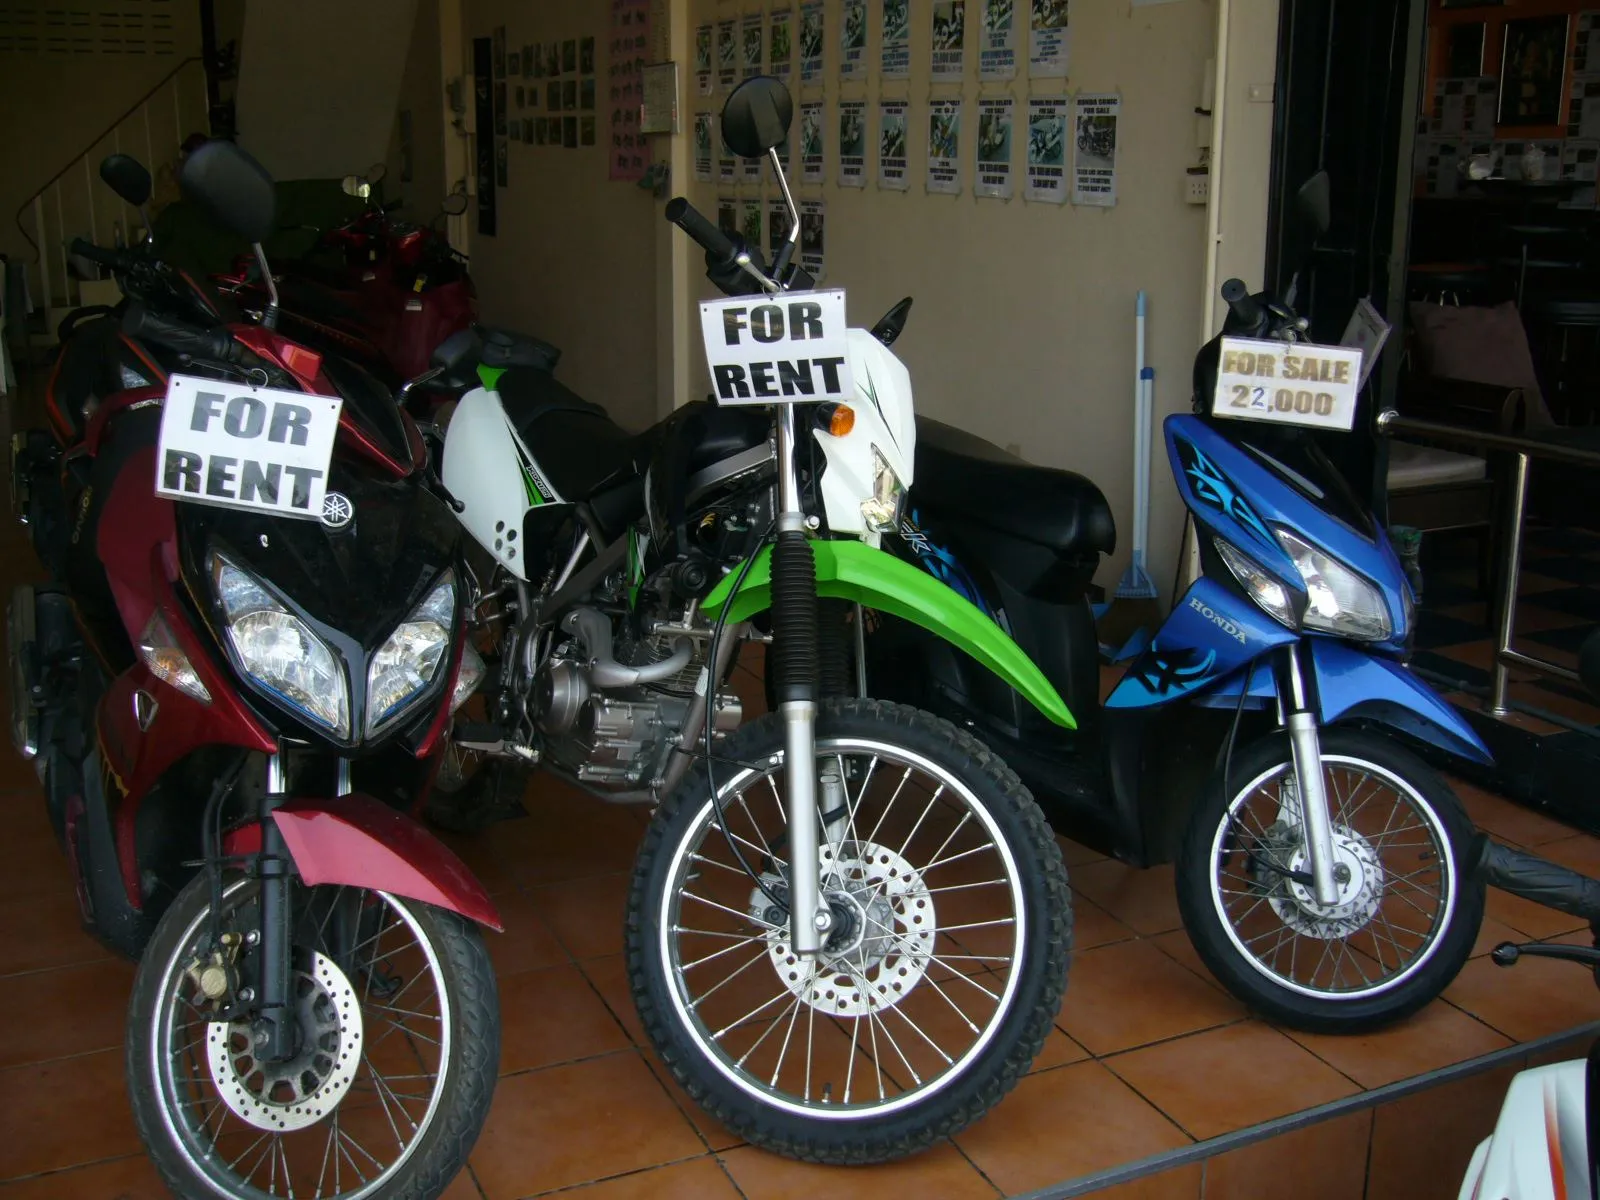 Three motorcycles are displayed for rent at Hua Hin Motorcycles in Hua Hin